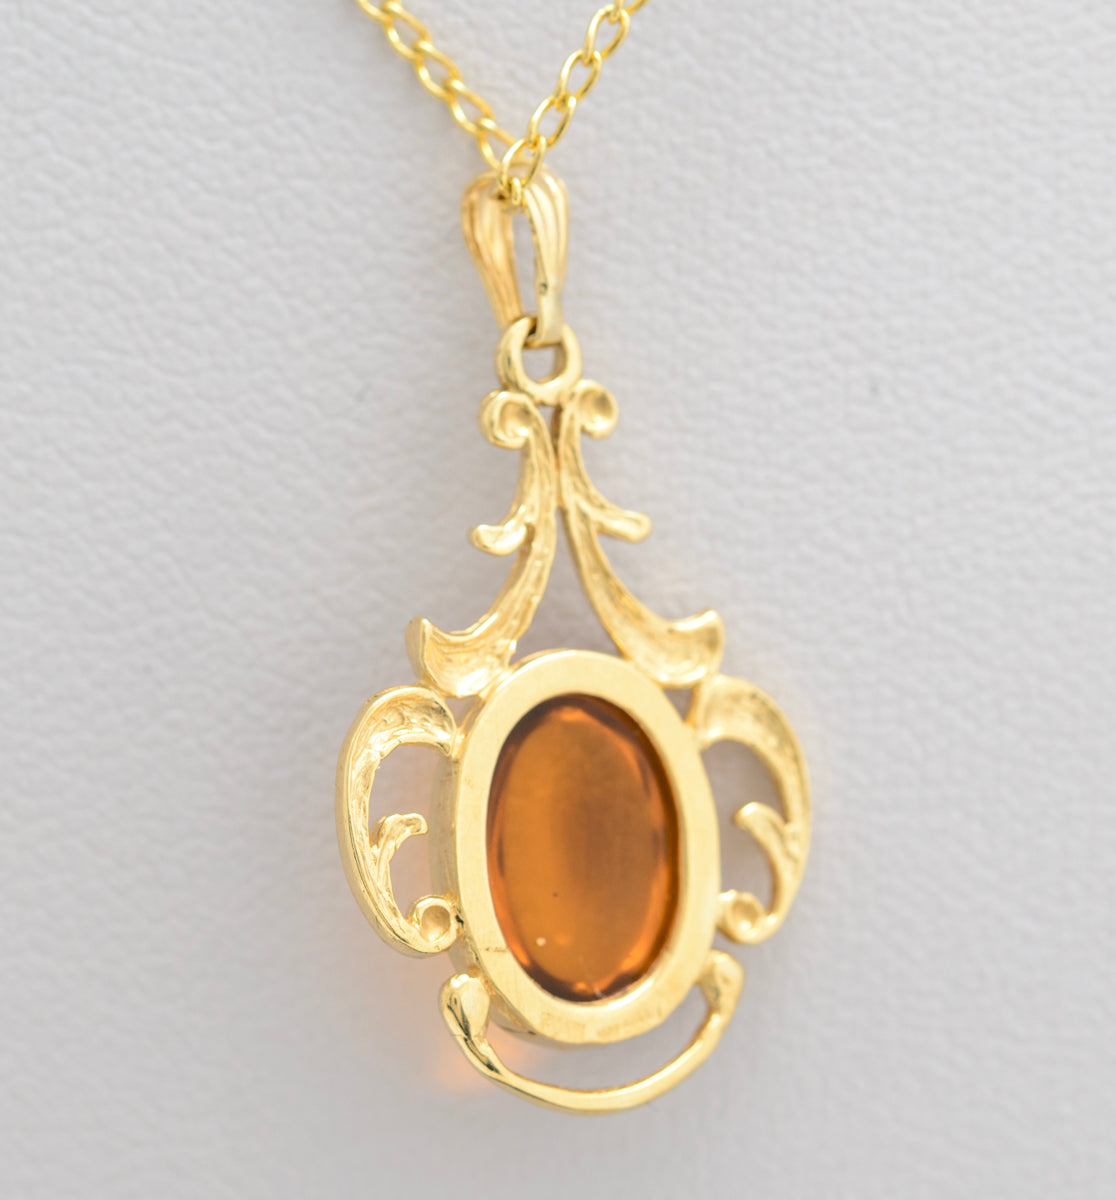 Vintage 9ct Gold & Amber Cabochon Necklace & Pendant 51cm Trace Chain (A1656)